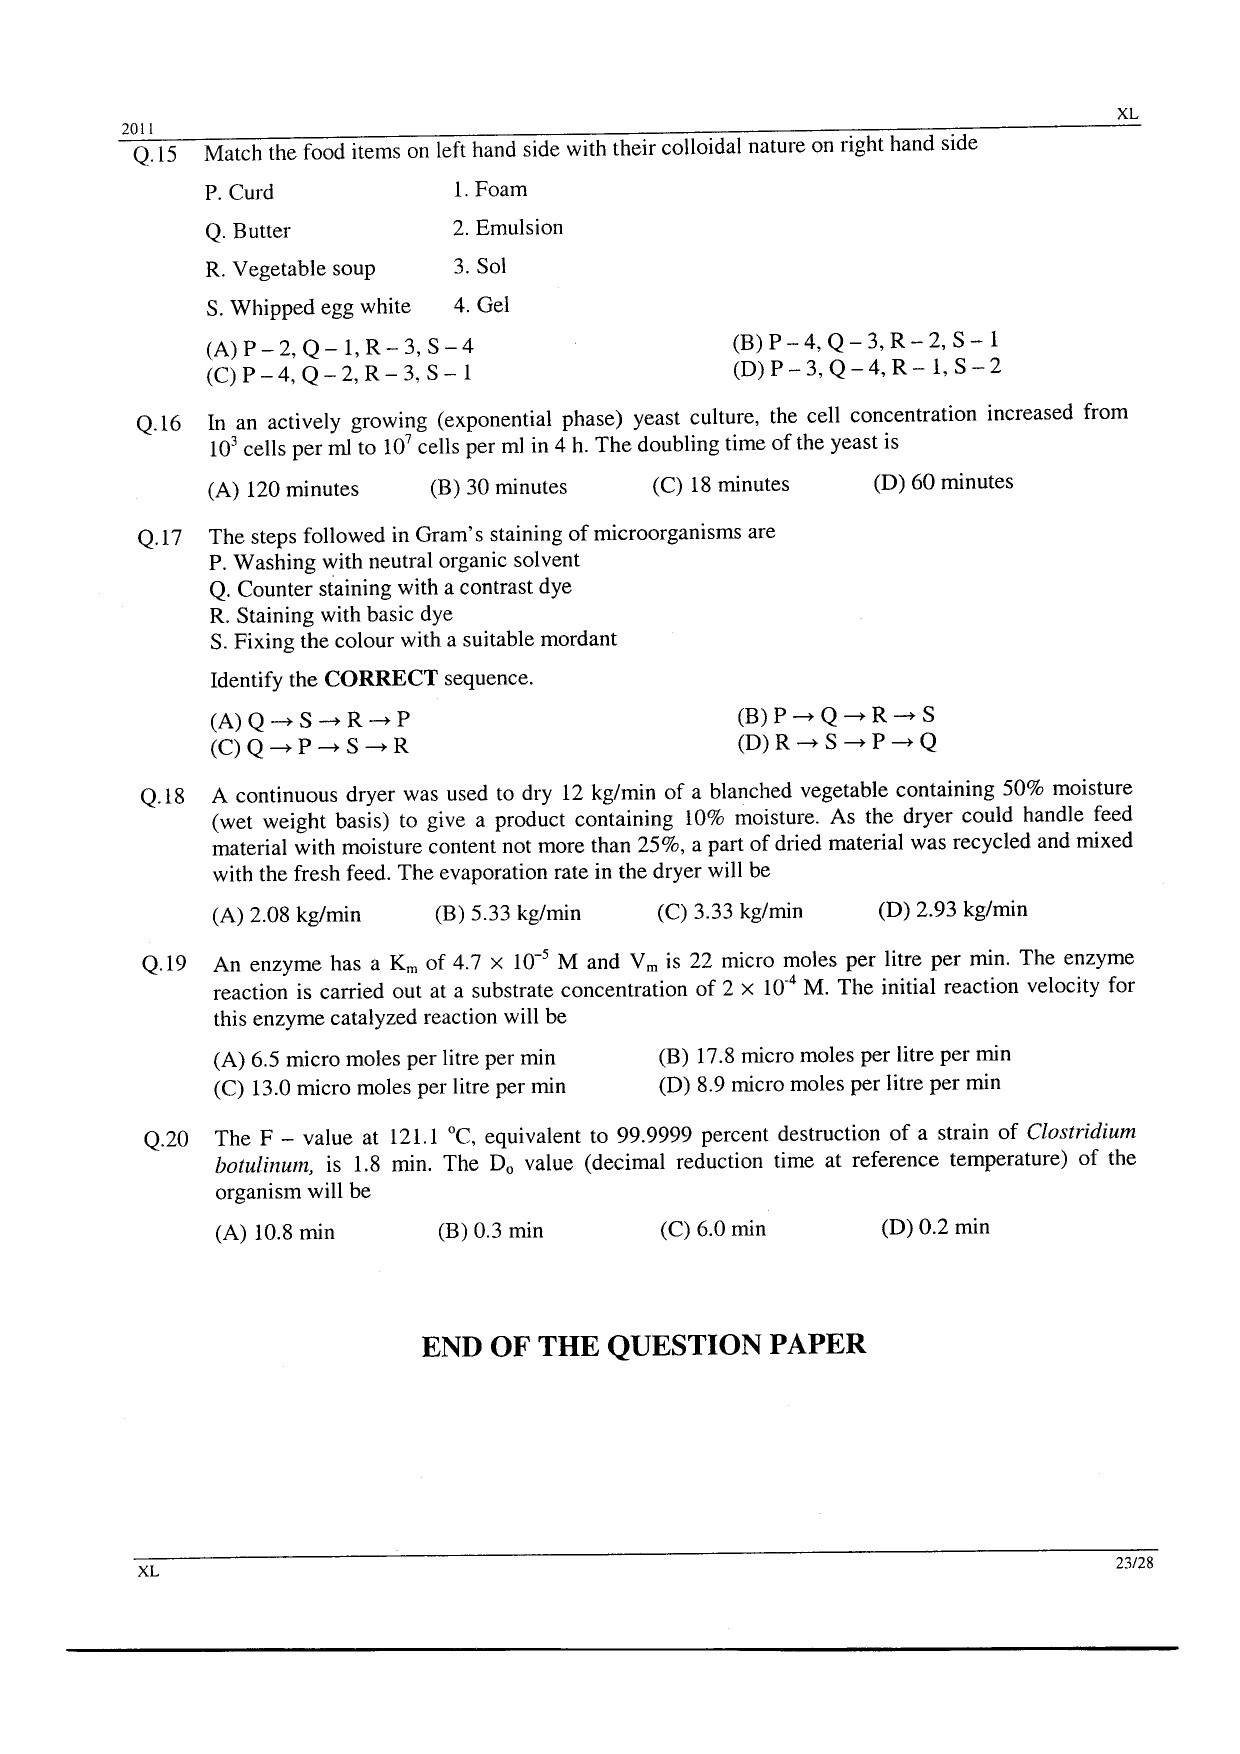 GATE Exam Question Paper 2011 Life Sciences 23